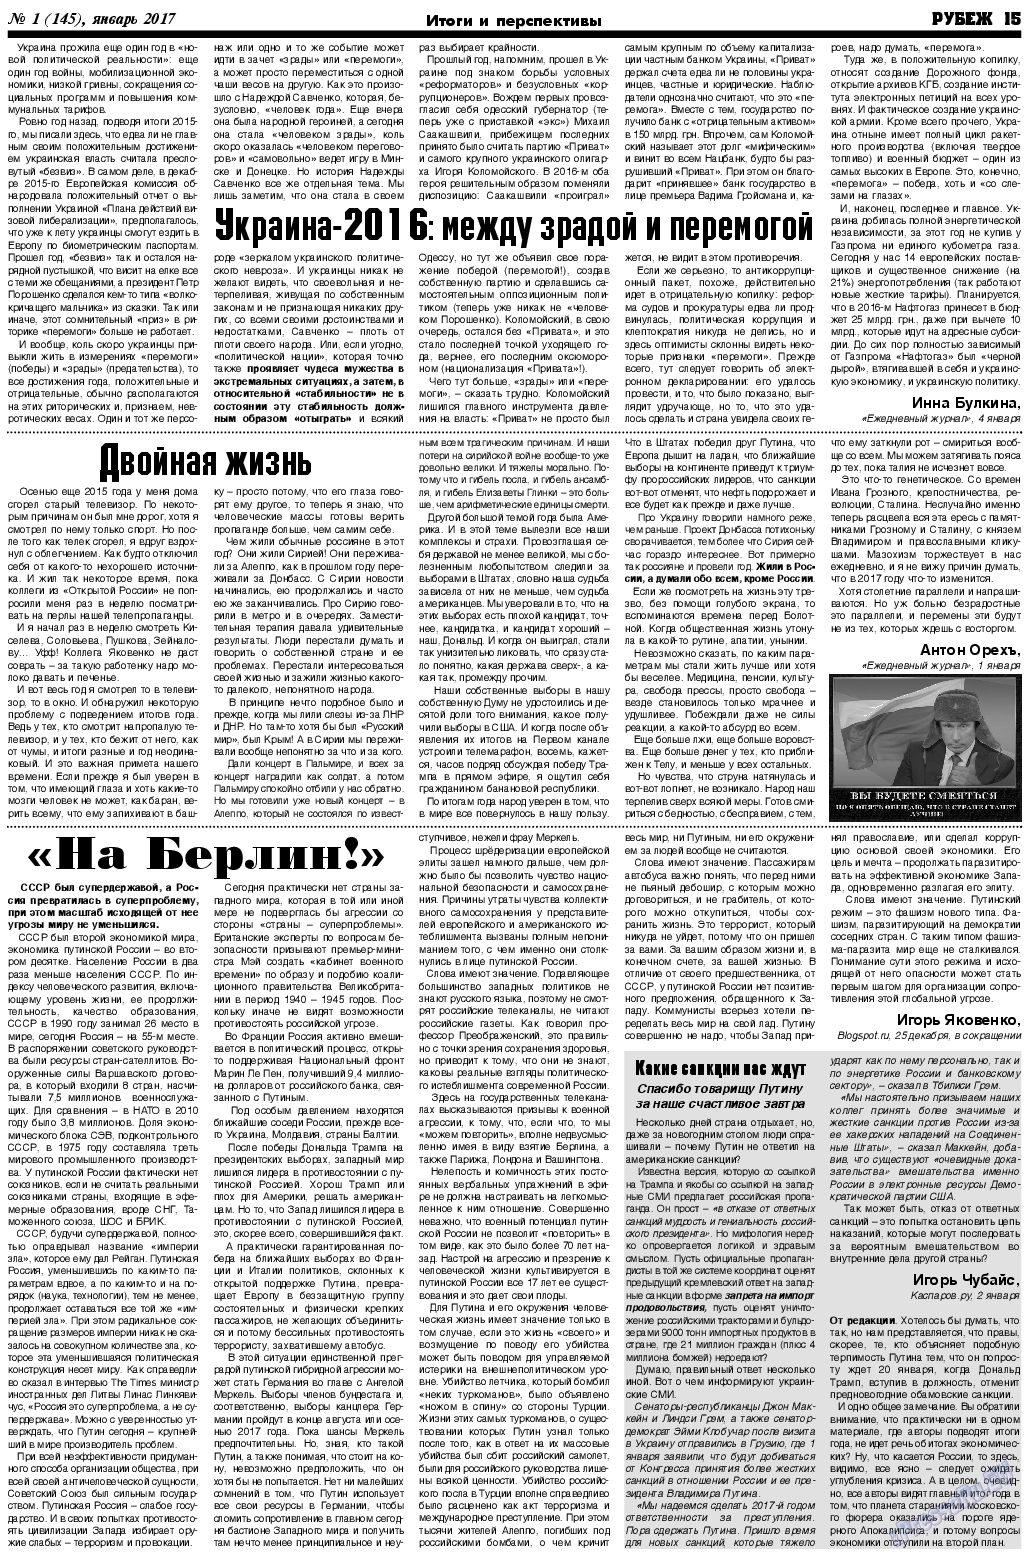 Рубеж, газета. 2017 №1 стр.15